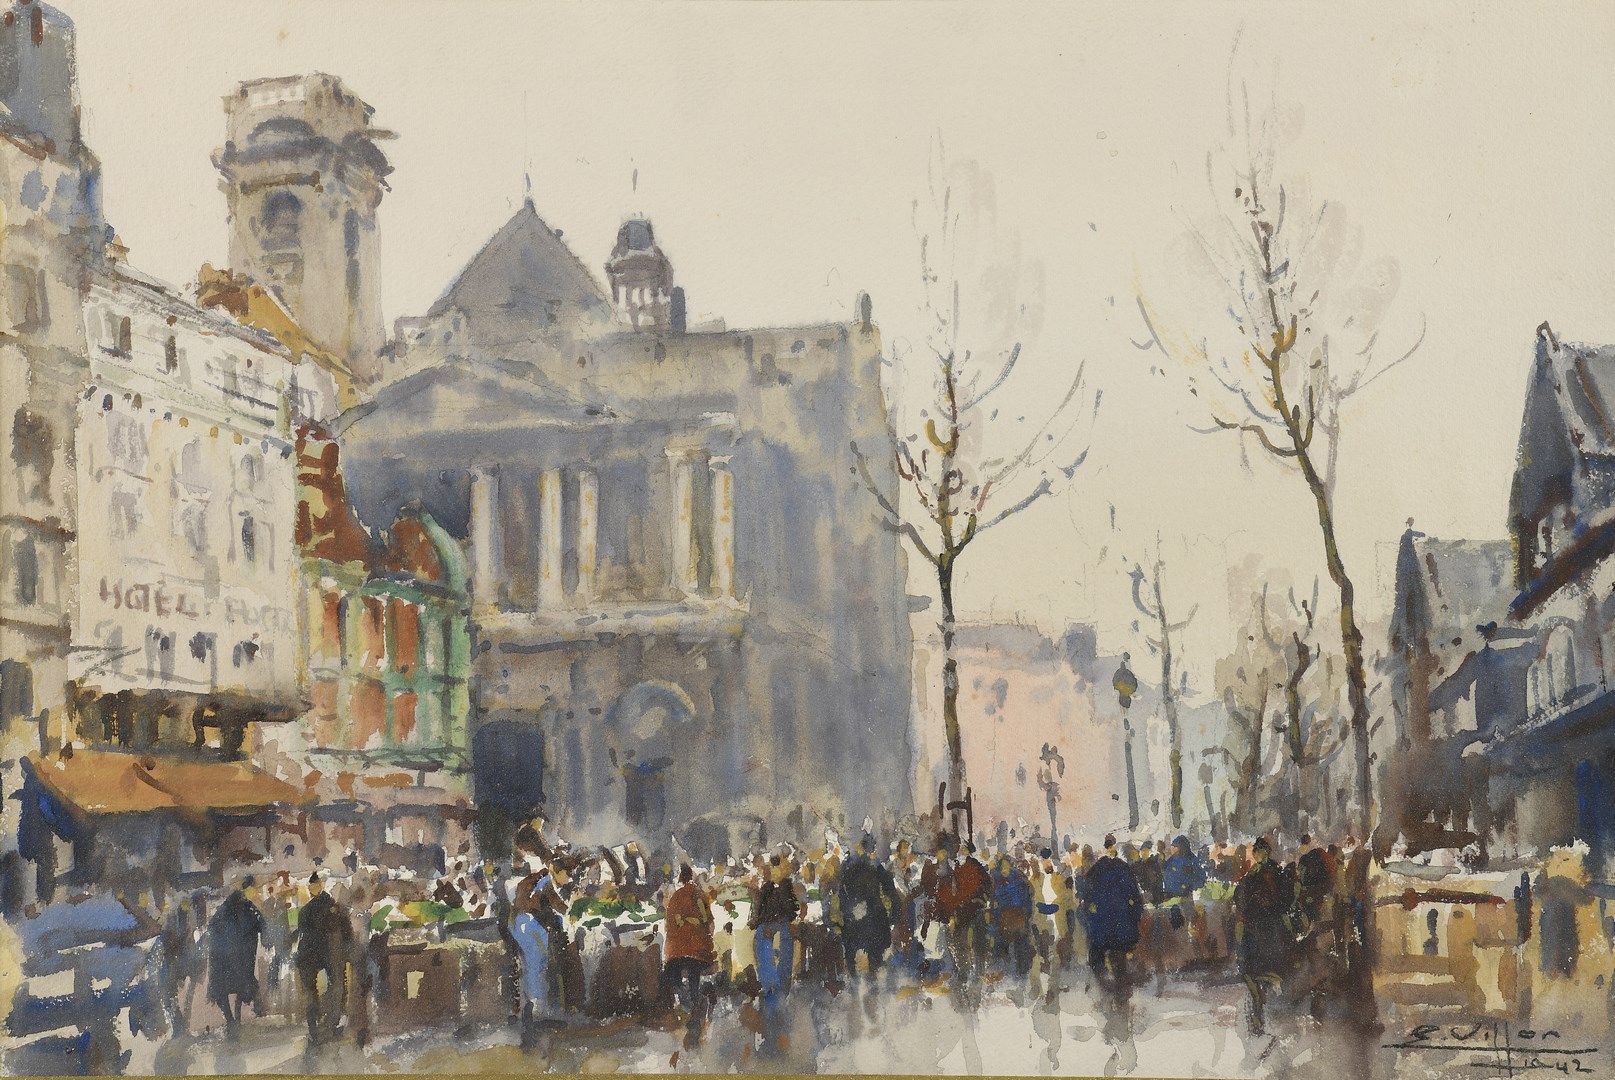 Null 维龙-尤金，1879-1951年

巴黎圣厄斯塔什古建筑区，1942年

纸上水彩和水粉画

右下角有签名并注明日期，位于装裱的背面

36 x 55&hellip;